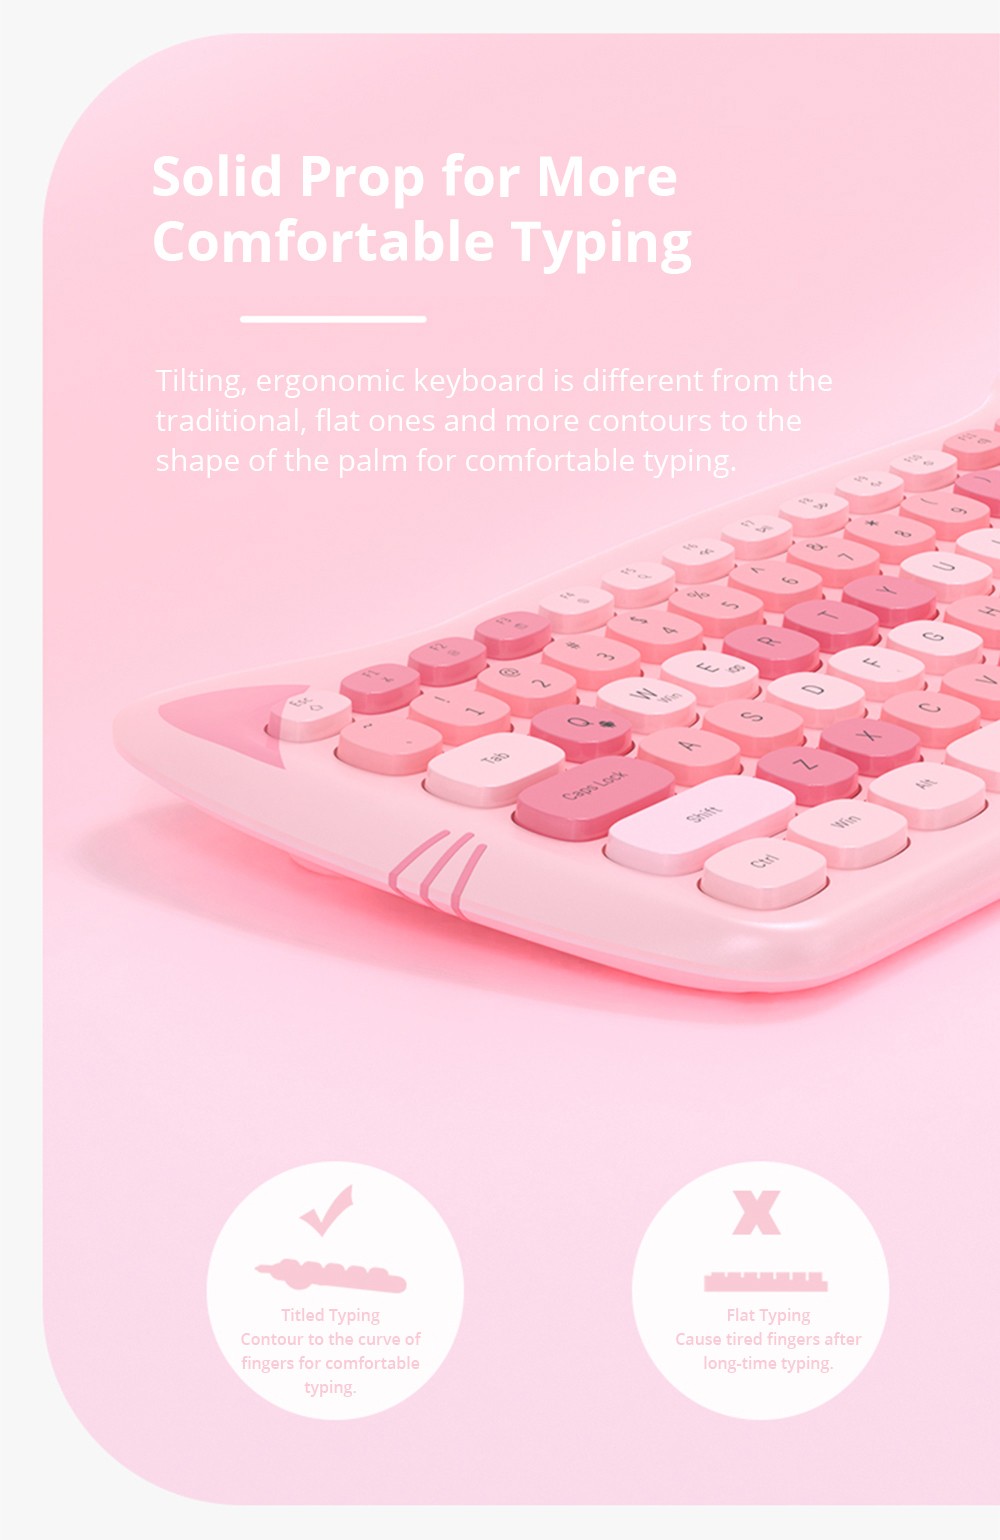 Ajazz 3060i Bluetooth Wireless Keyboard Cute Pet Design 84 Keys Support Mac iOS Windows Android - Pink